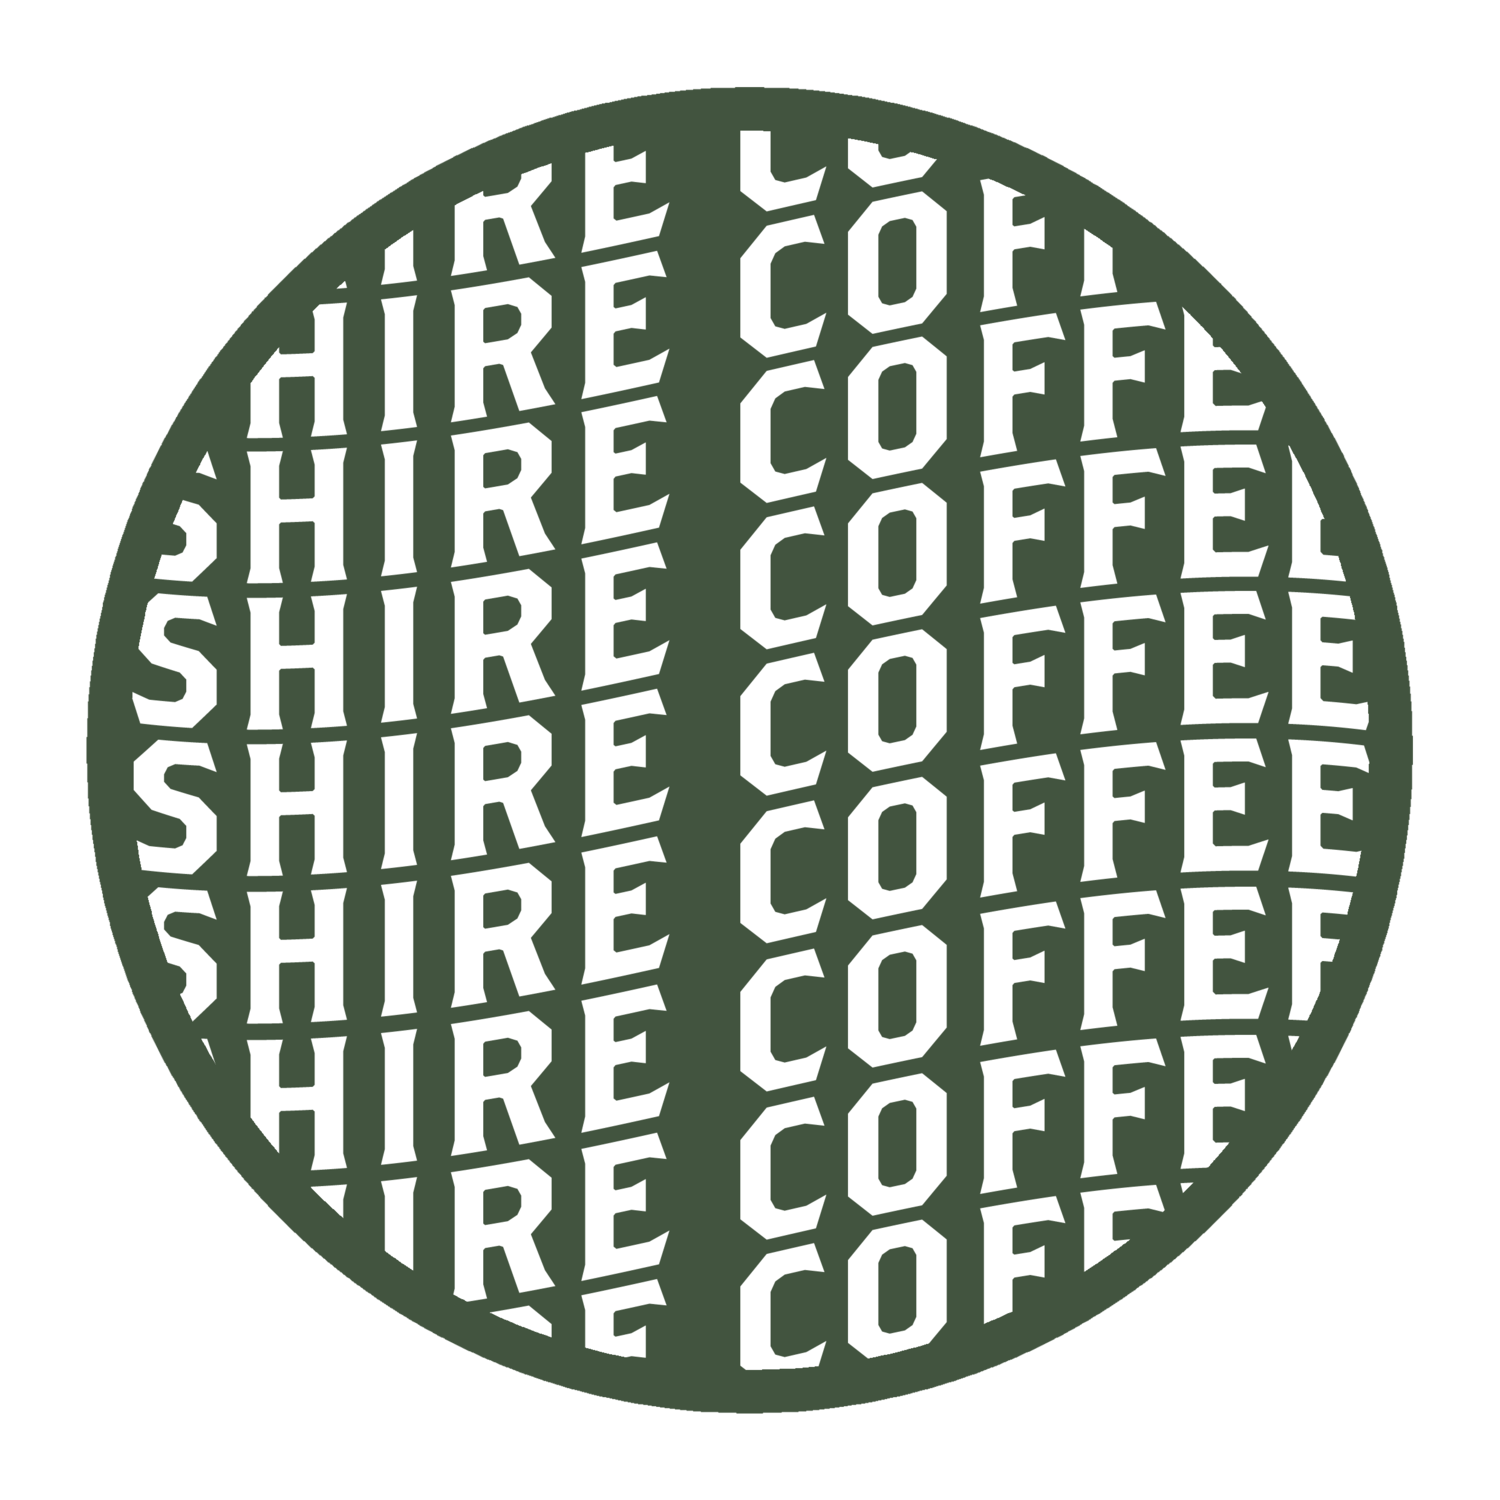 Shire Coffee Co.